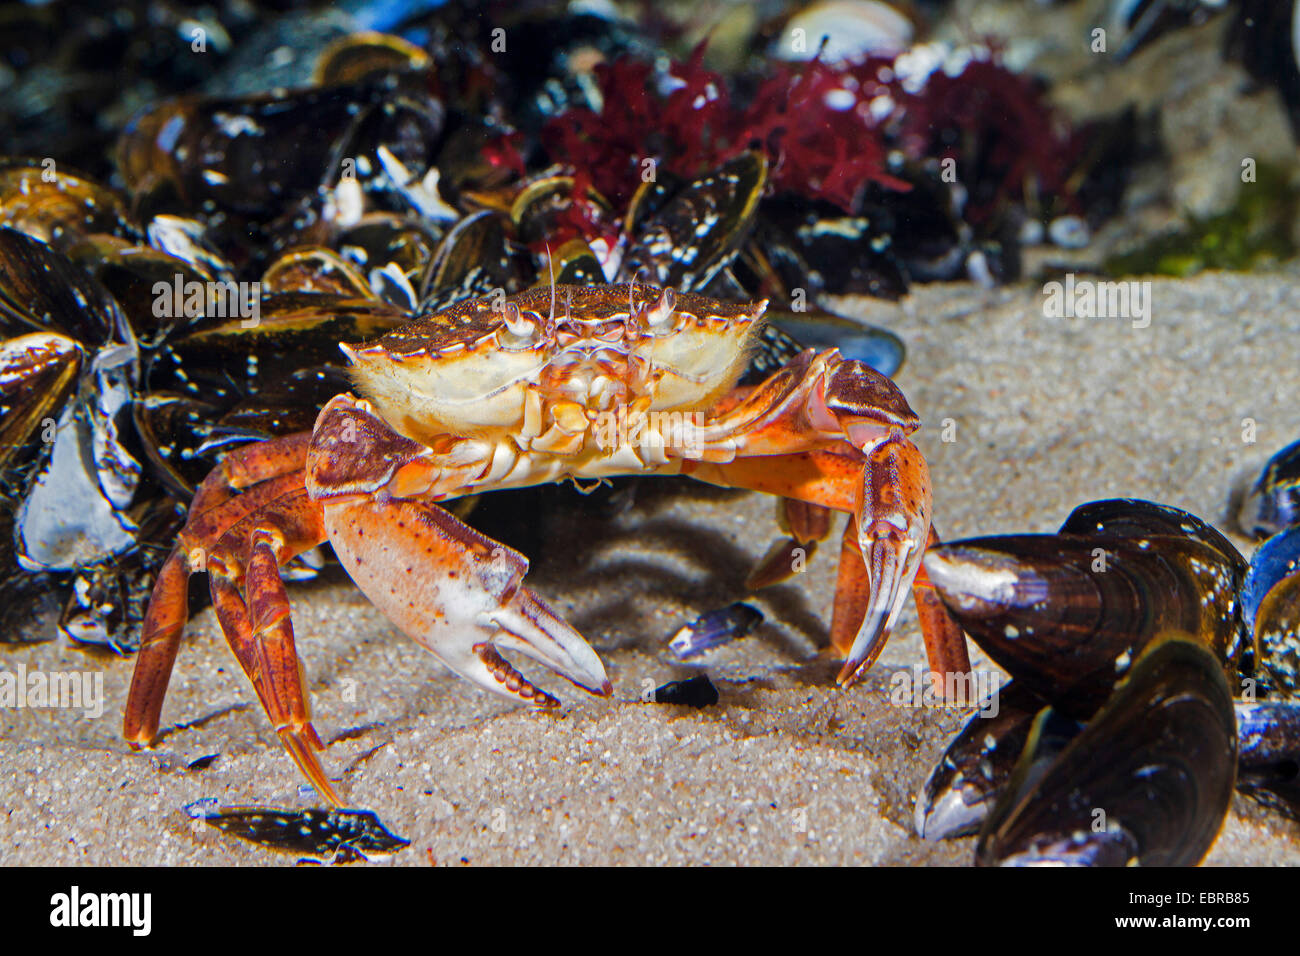 Green shore crab, Green crab, North Atlantic shore crab (Carcinus maenas), on the beach Stock Photo